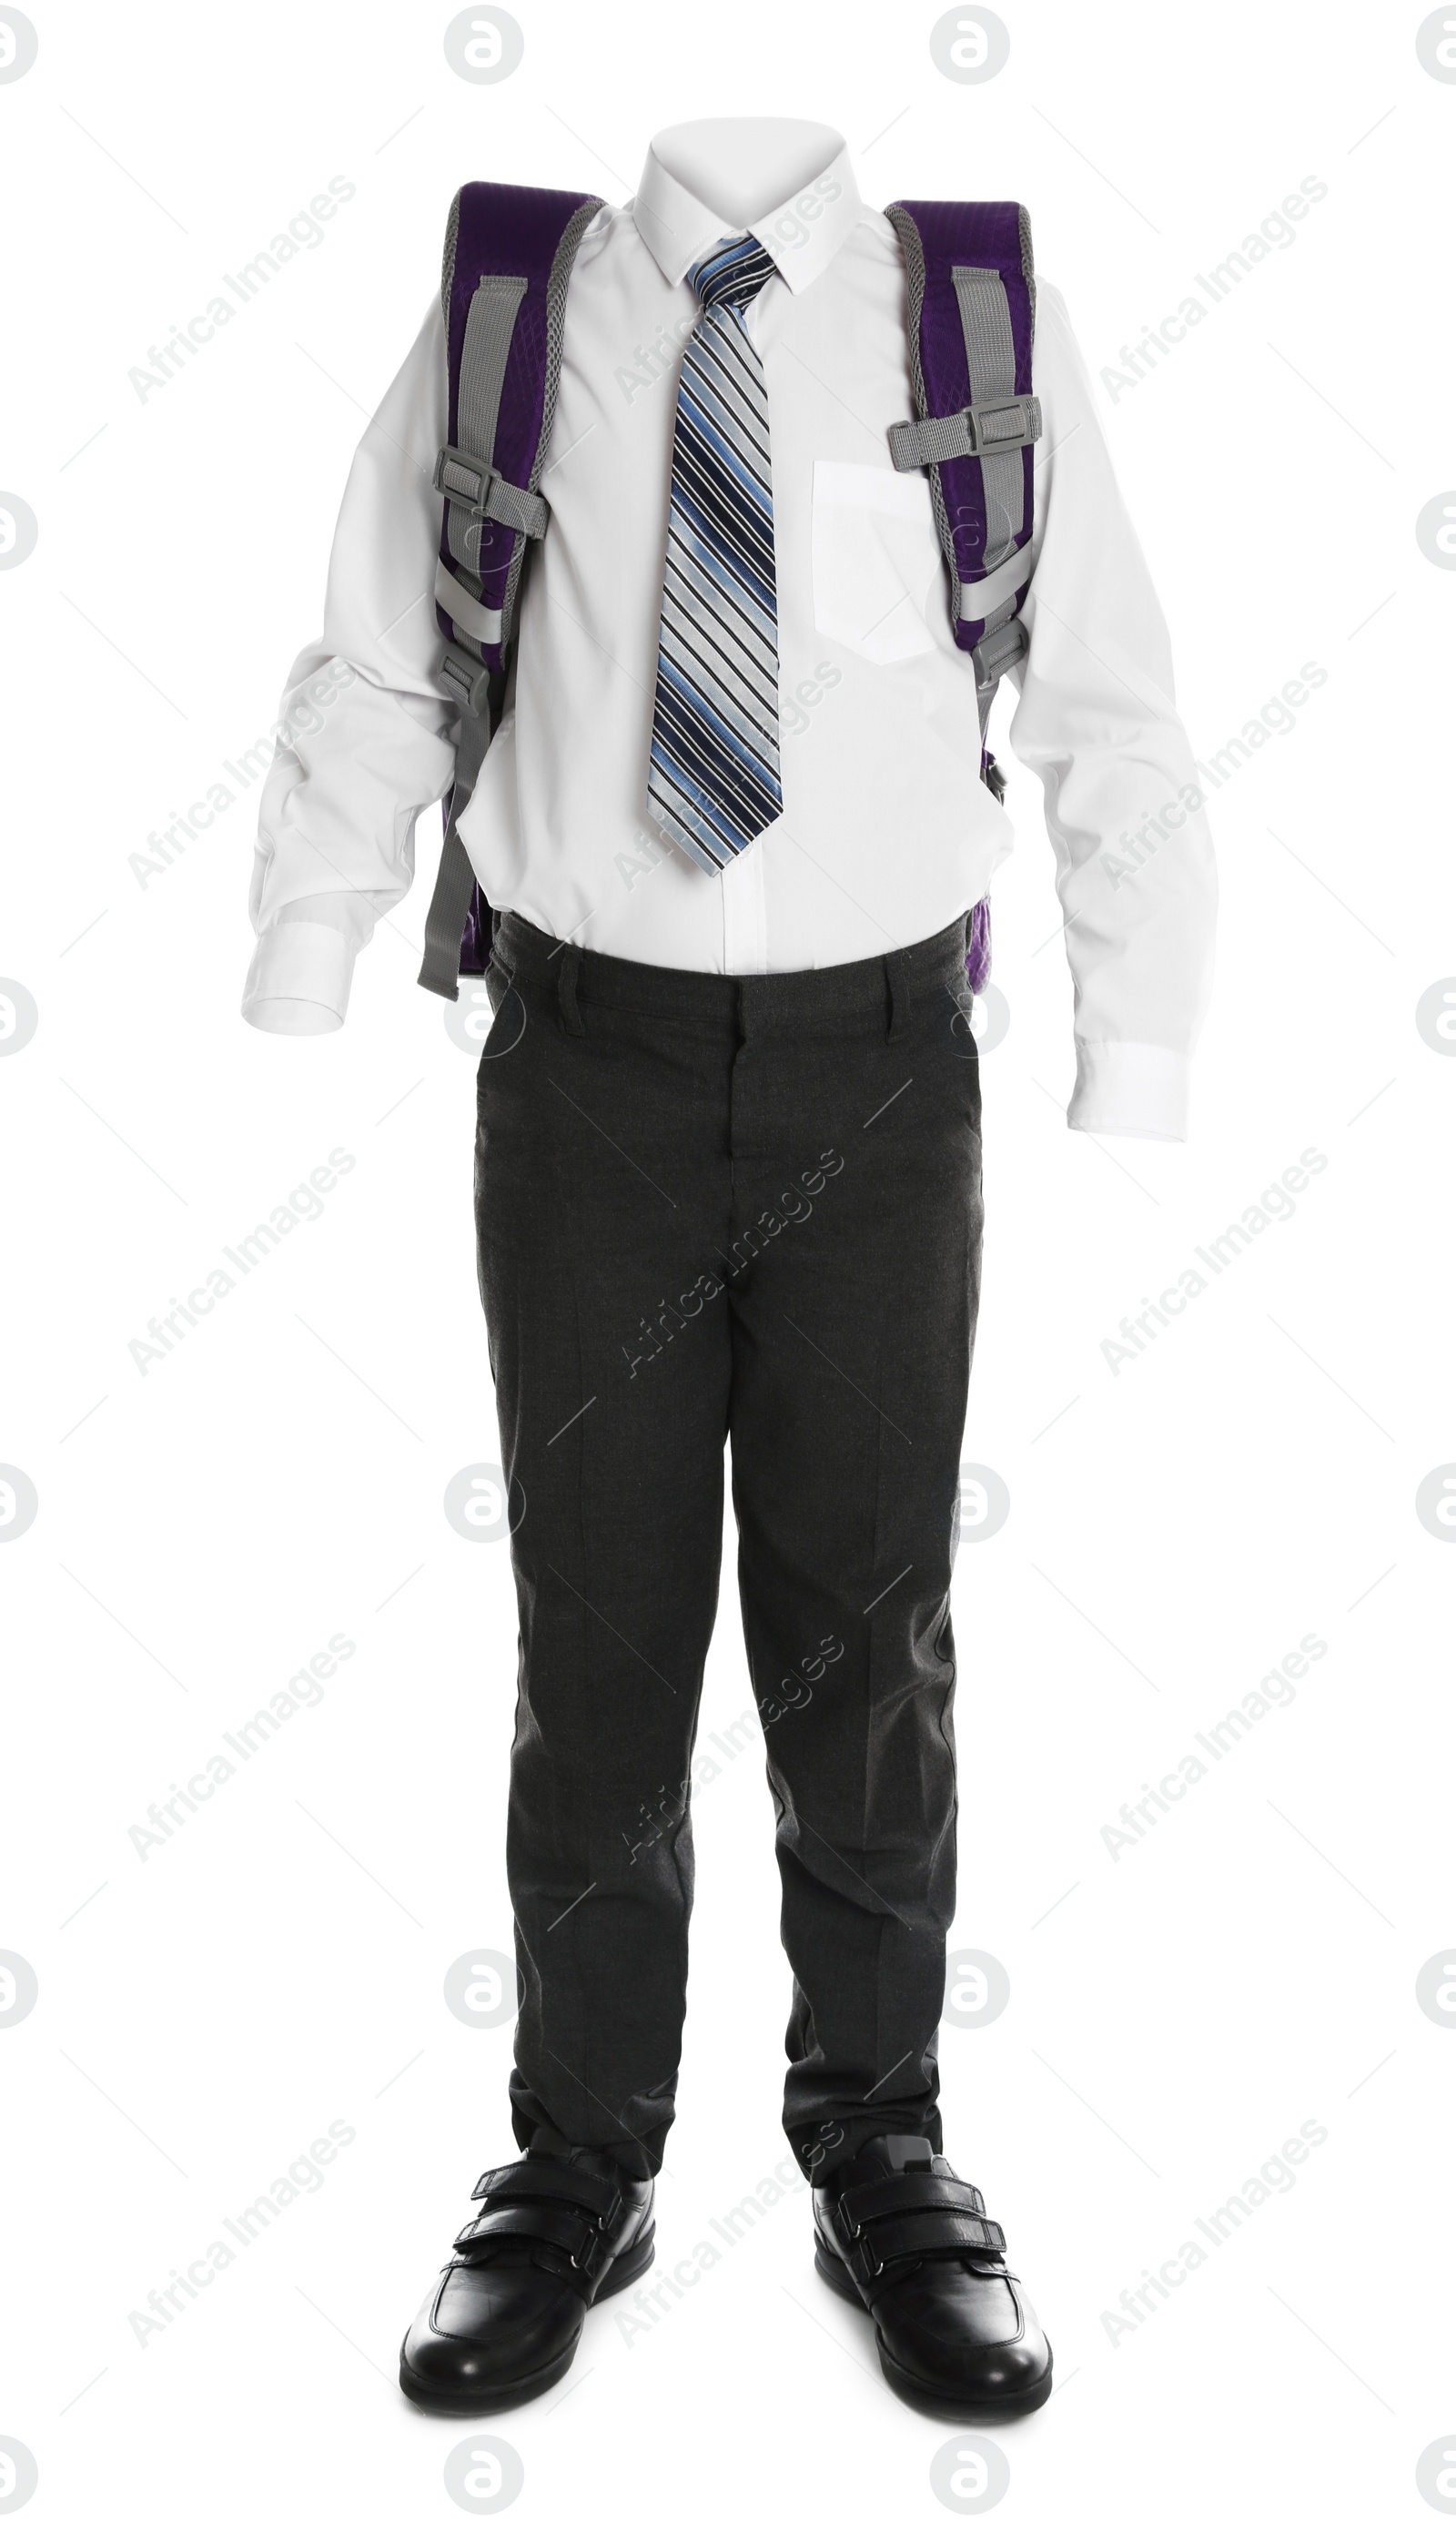 Image of School uniform for boy on white background